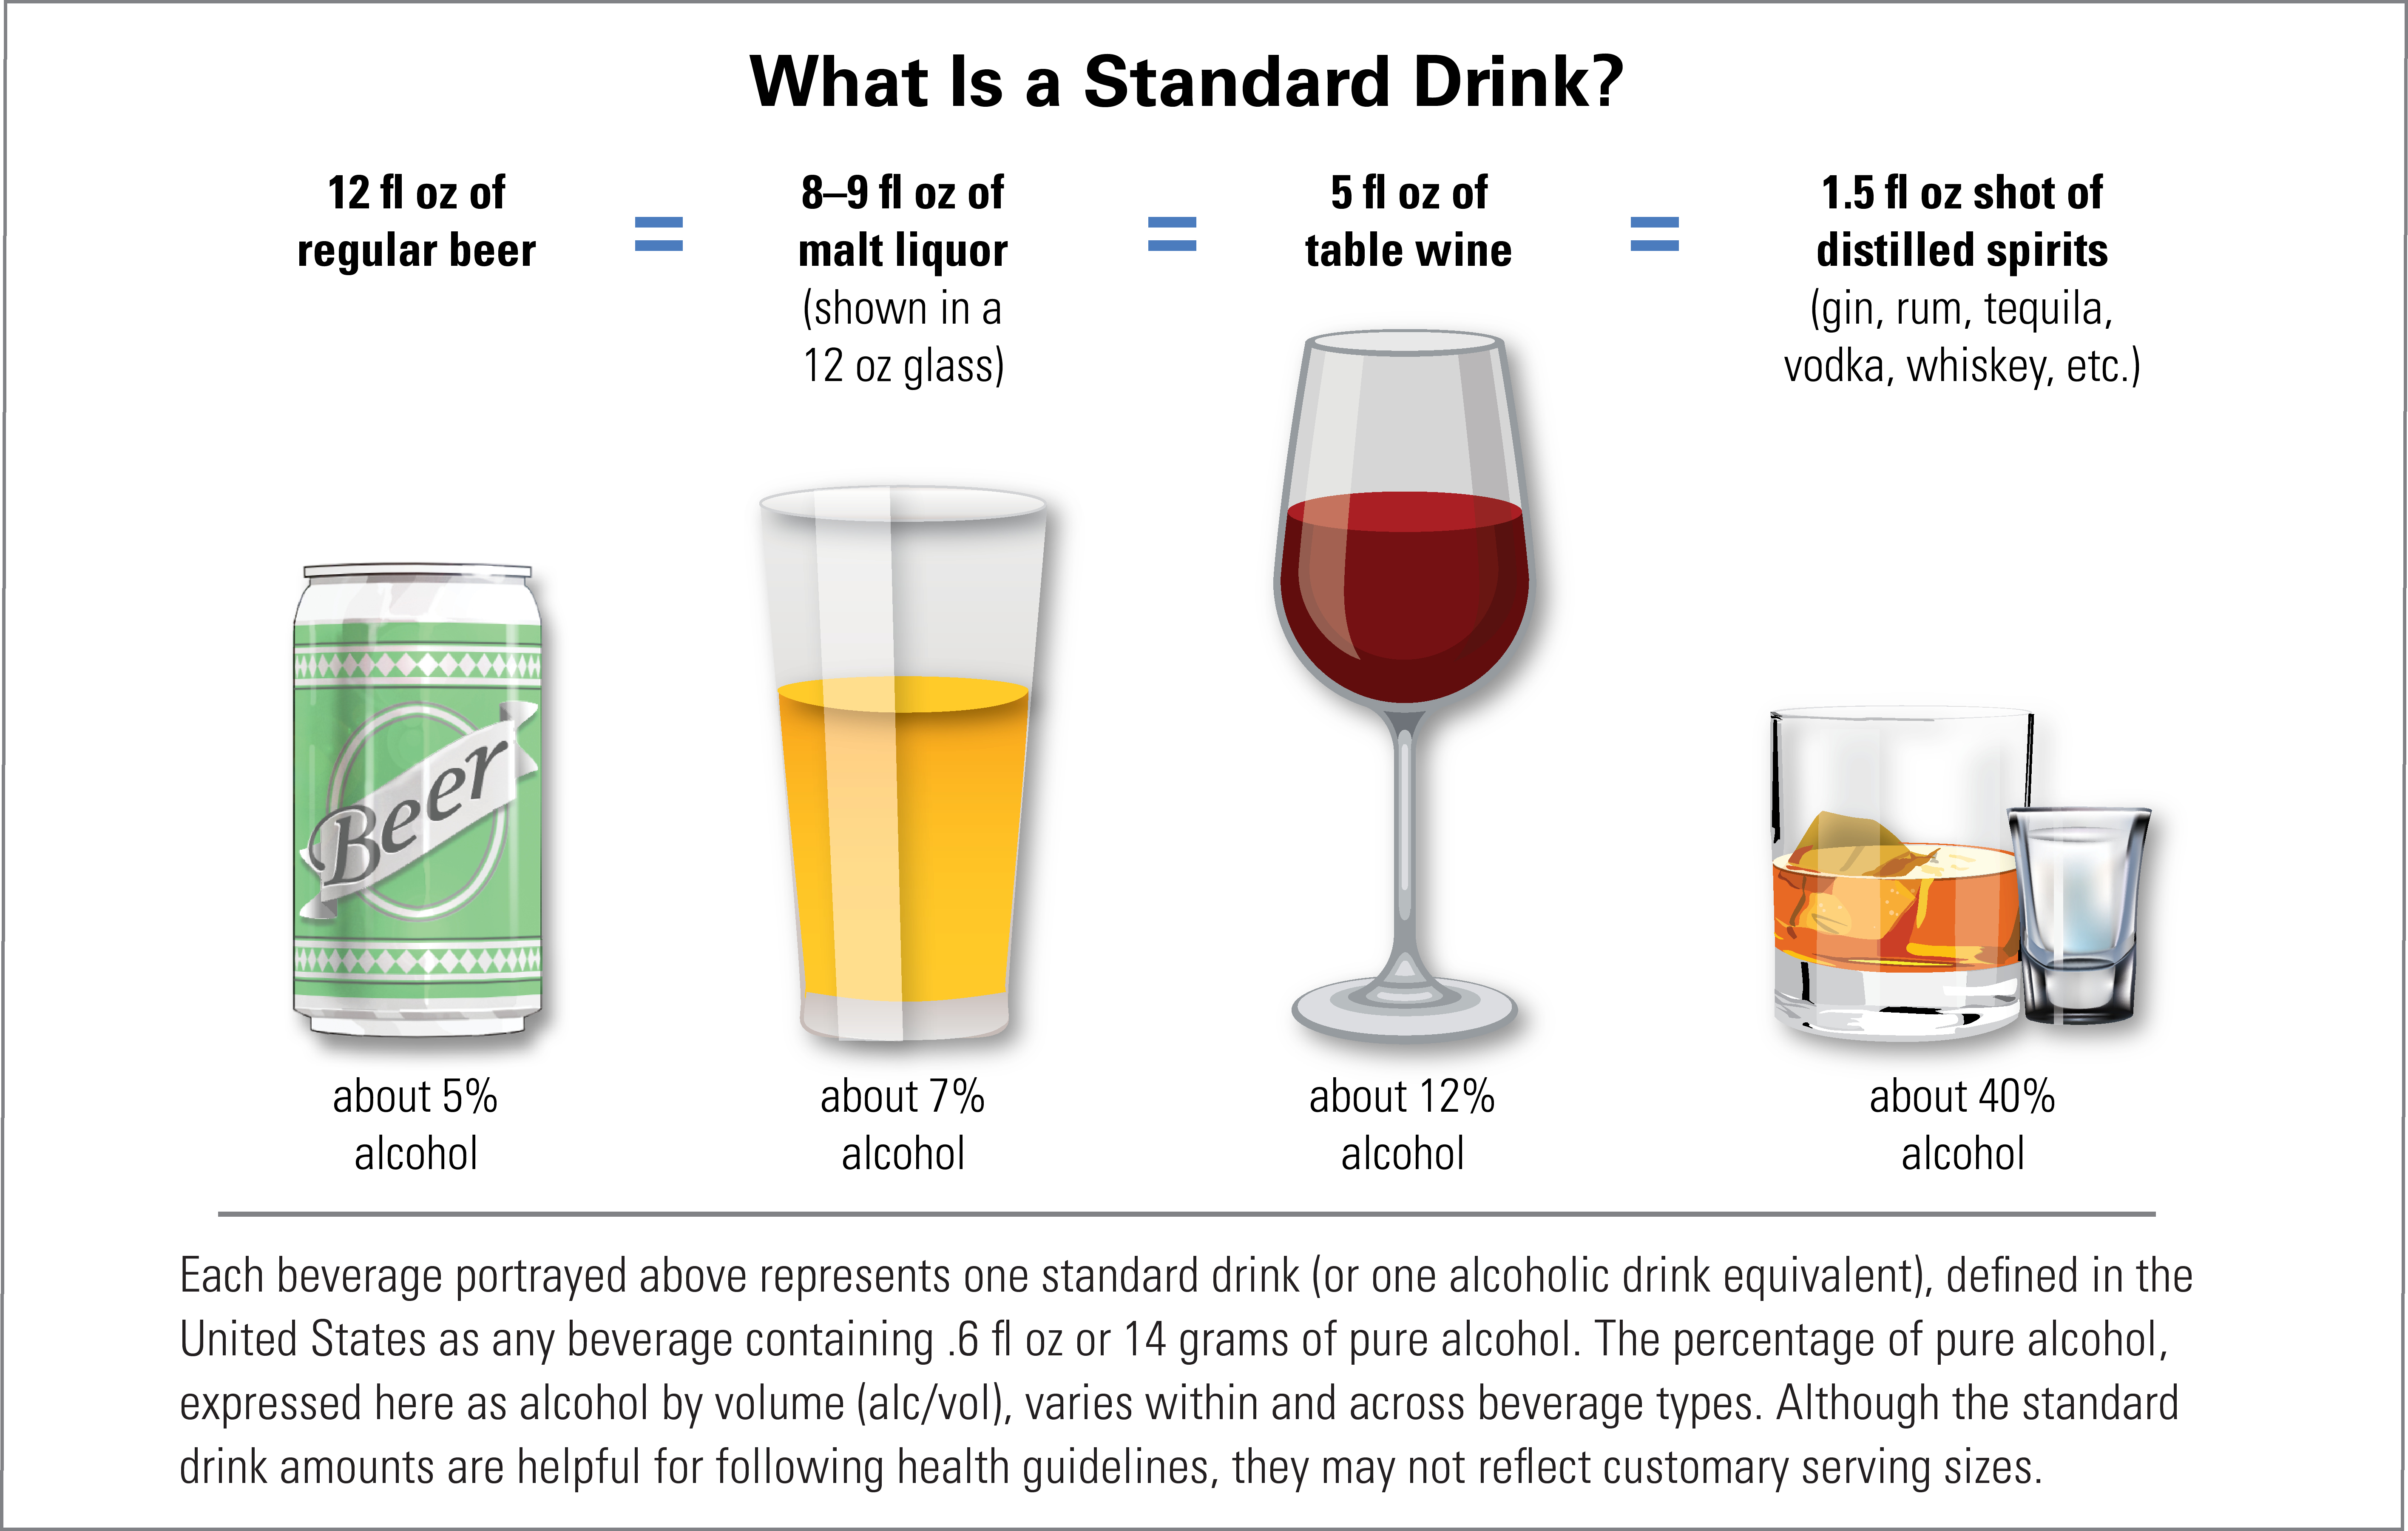 standard drink definitions.